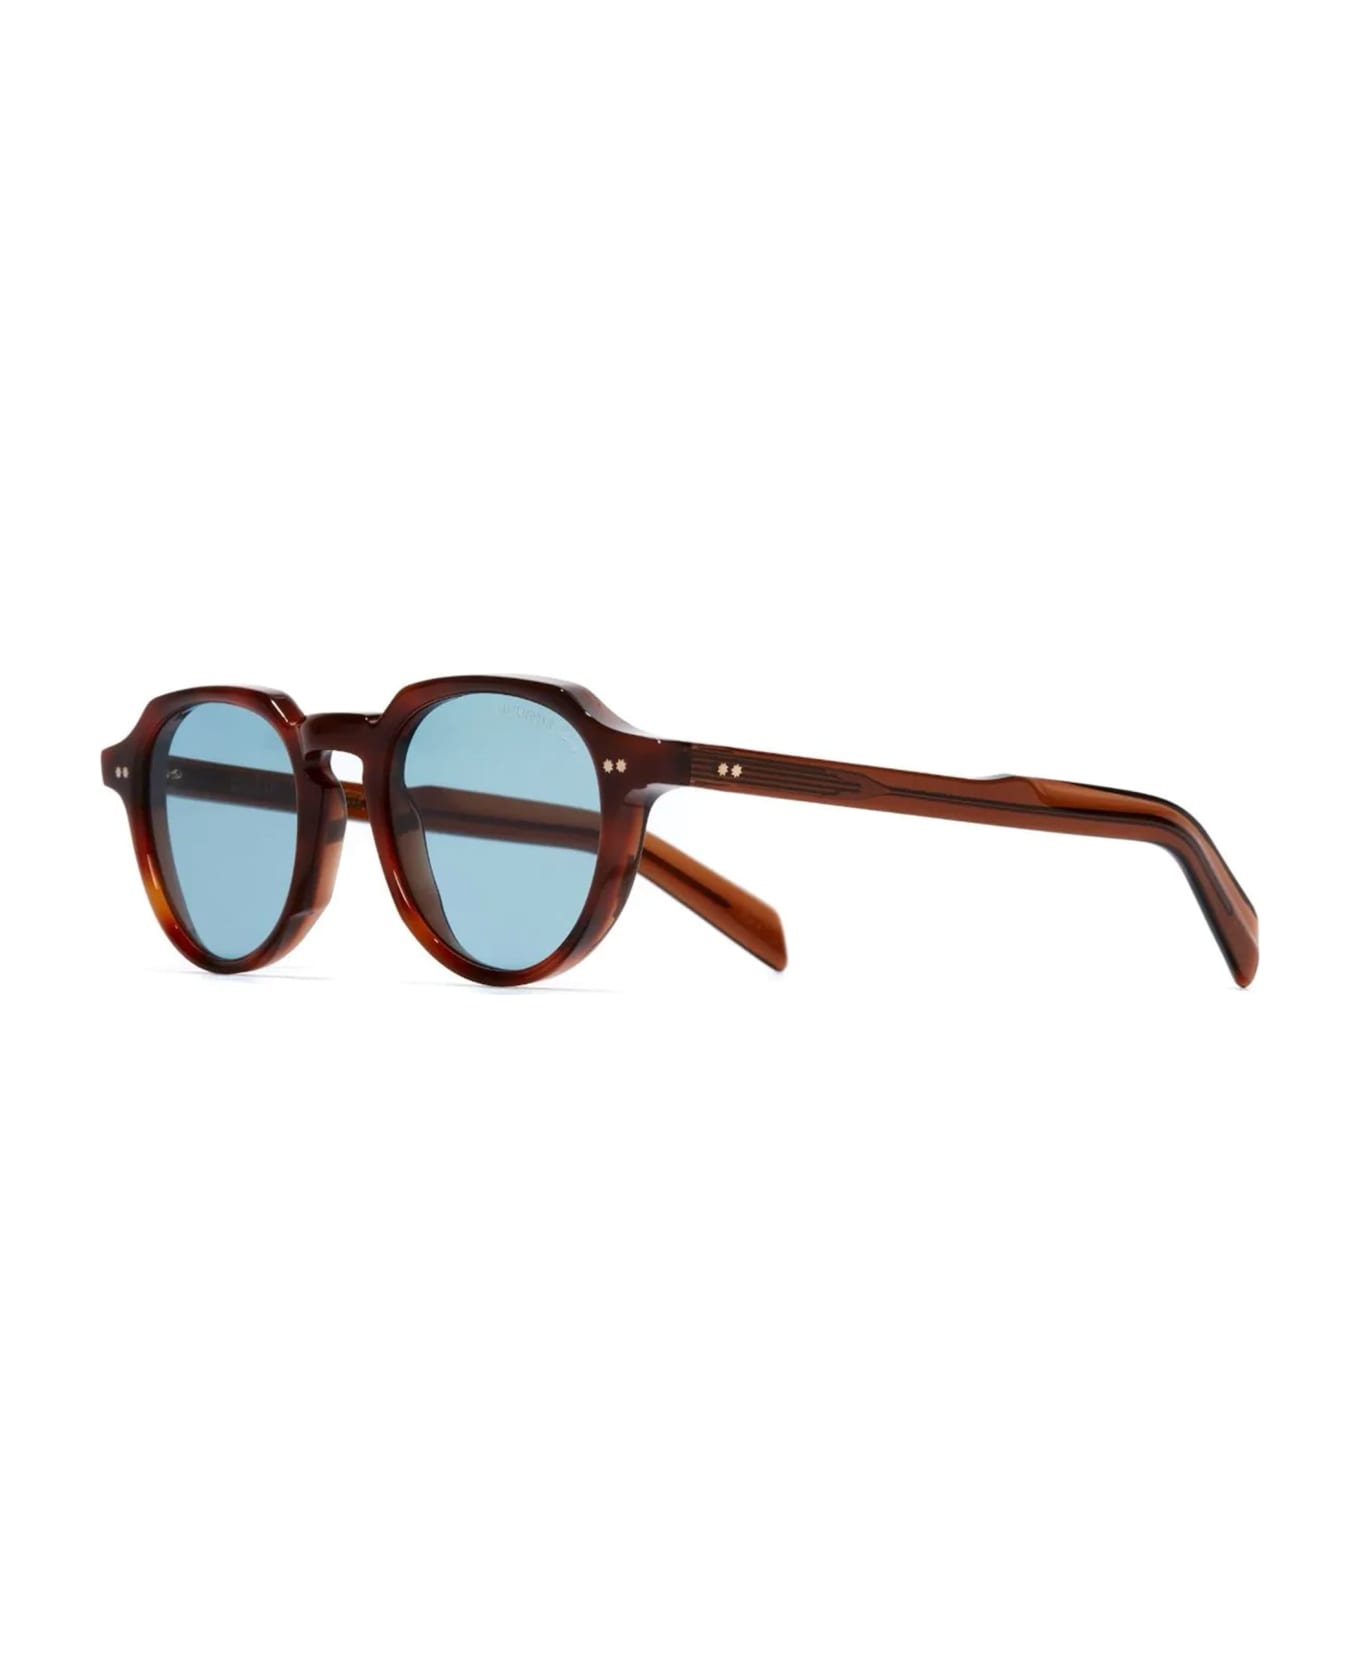 Cutler and Gross Gr06 / Vintage Sunburst Sunglasses - brown